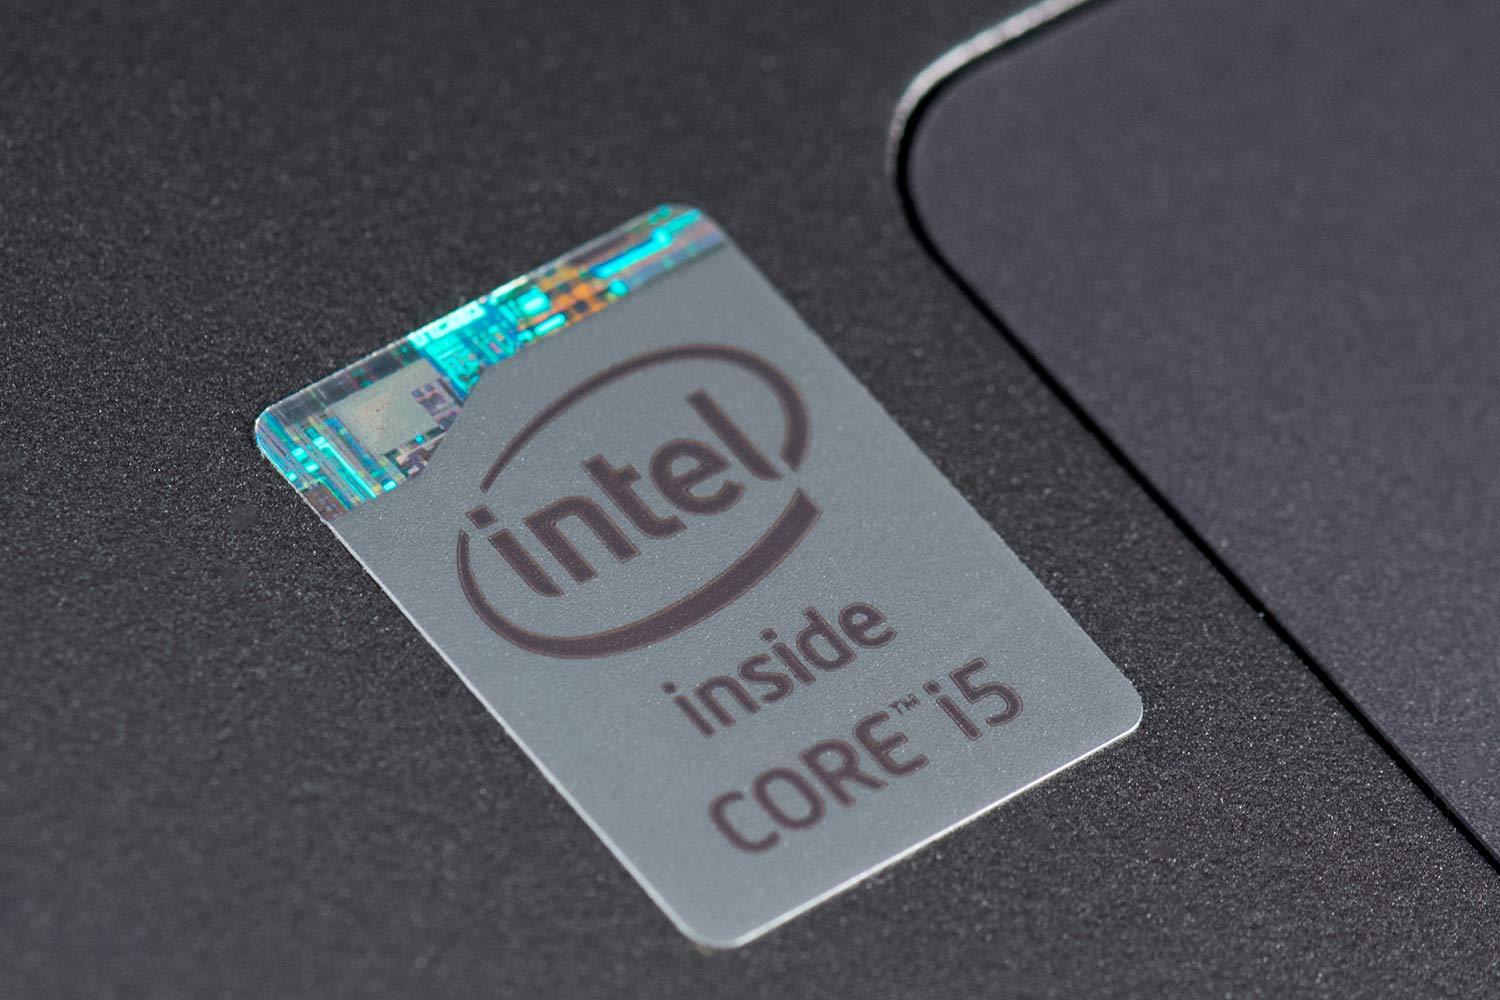 Intel Core i5-9600T i5 9600T 2.3GHz 6-Core 6-Thread Processeur 35W